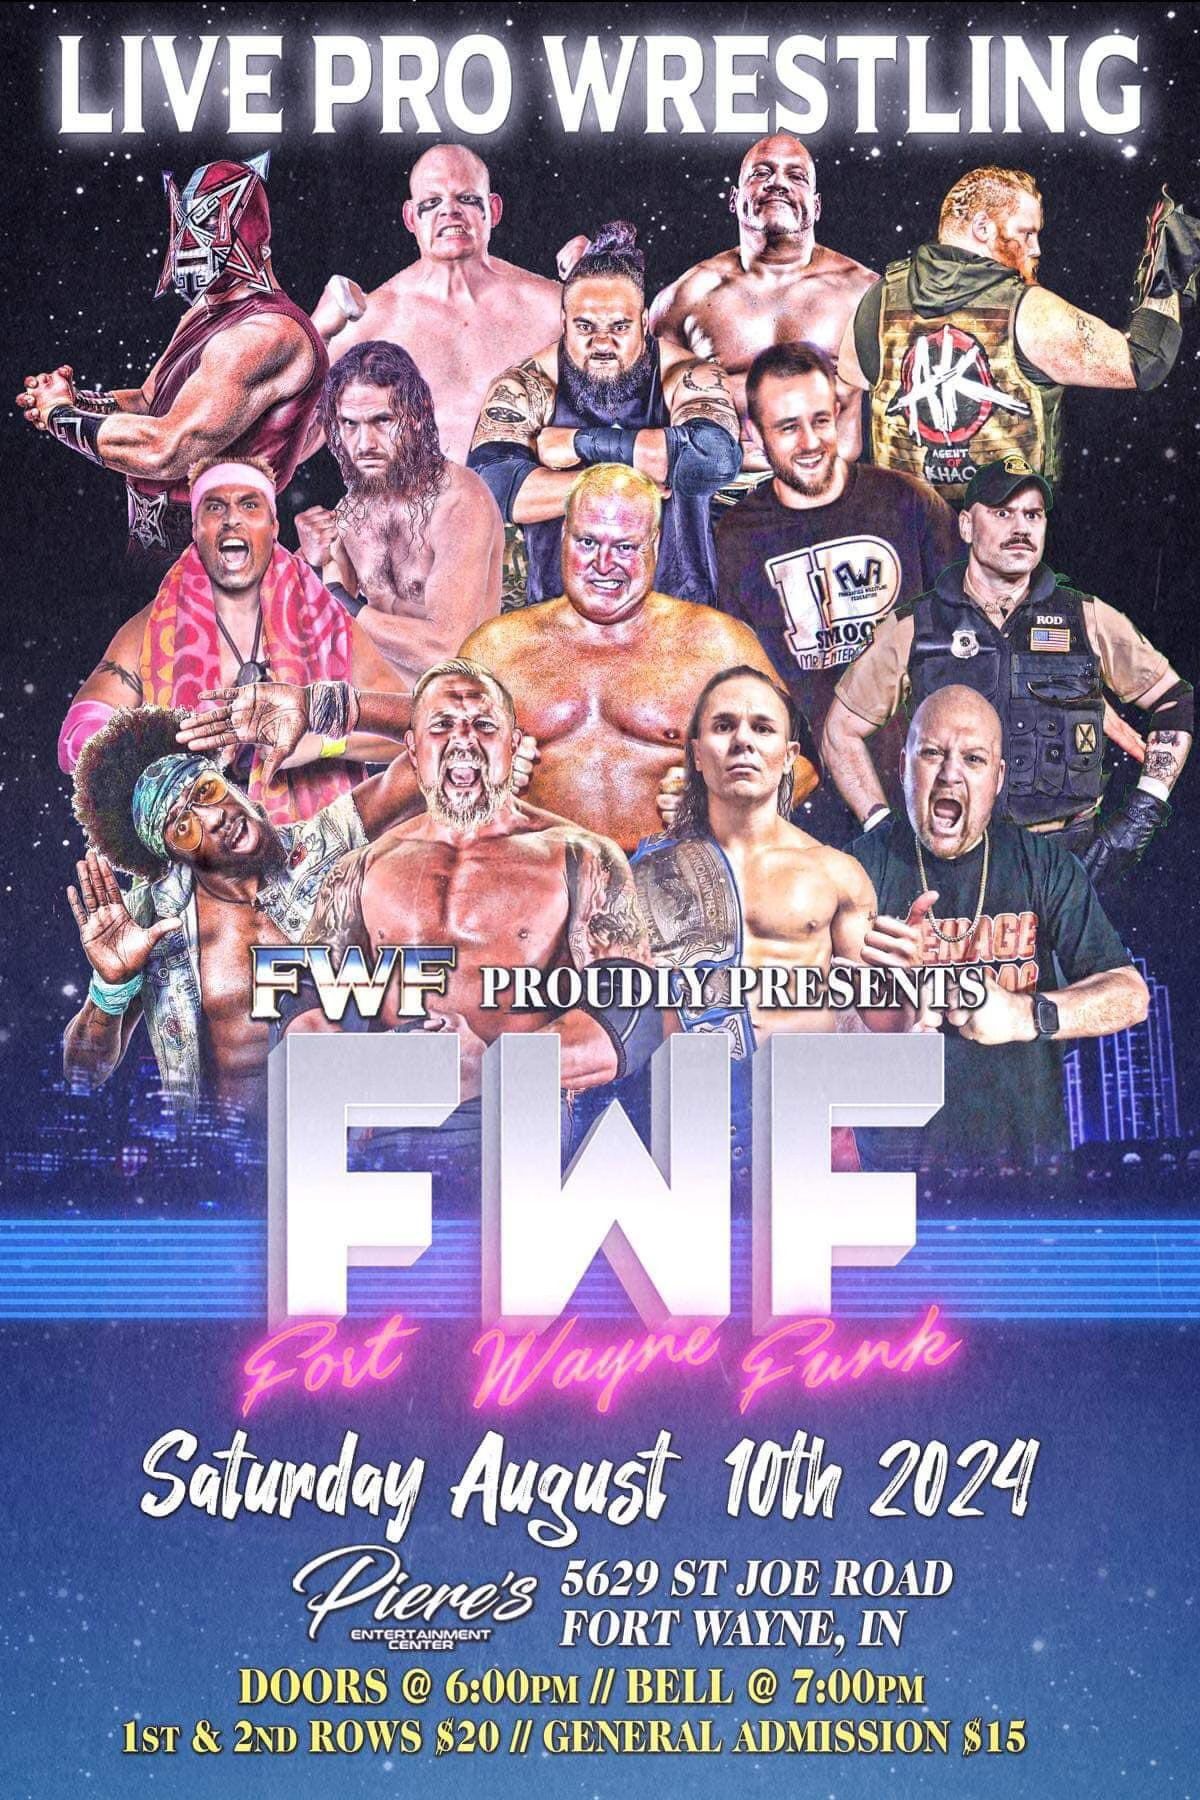 Funkdafied Wrestling Federation Presents Fort Wayne Funk! in Piere's Main Room